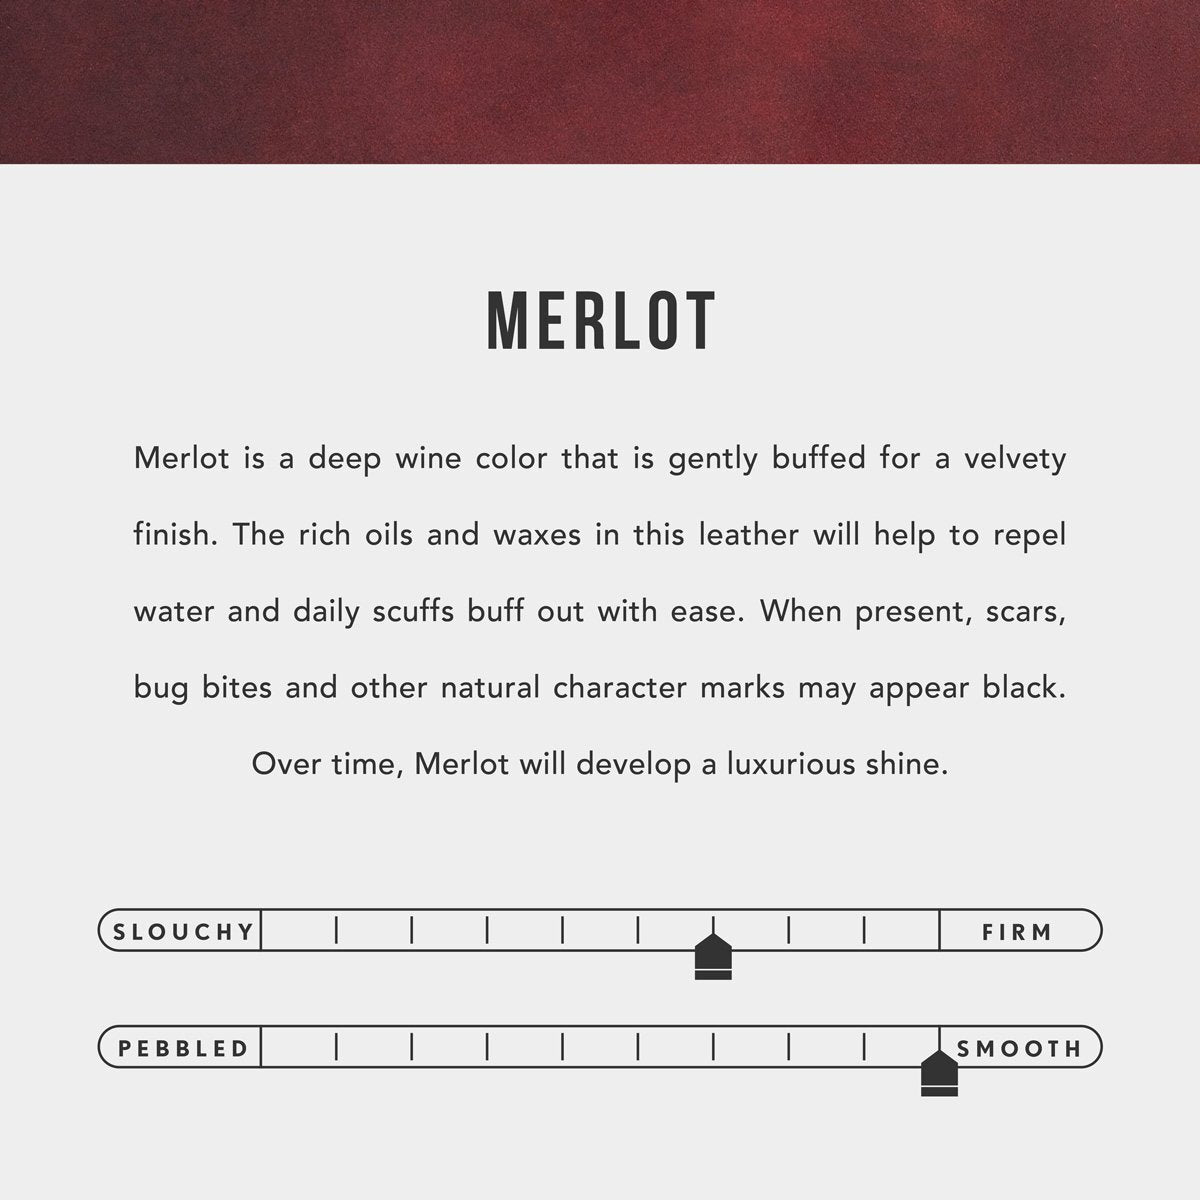 Merlot | infographic